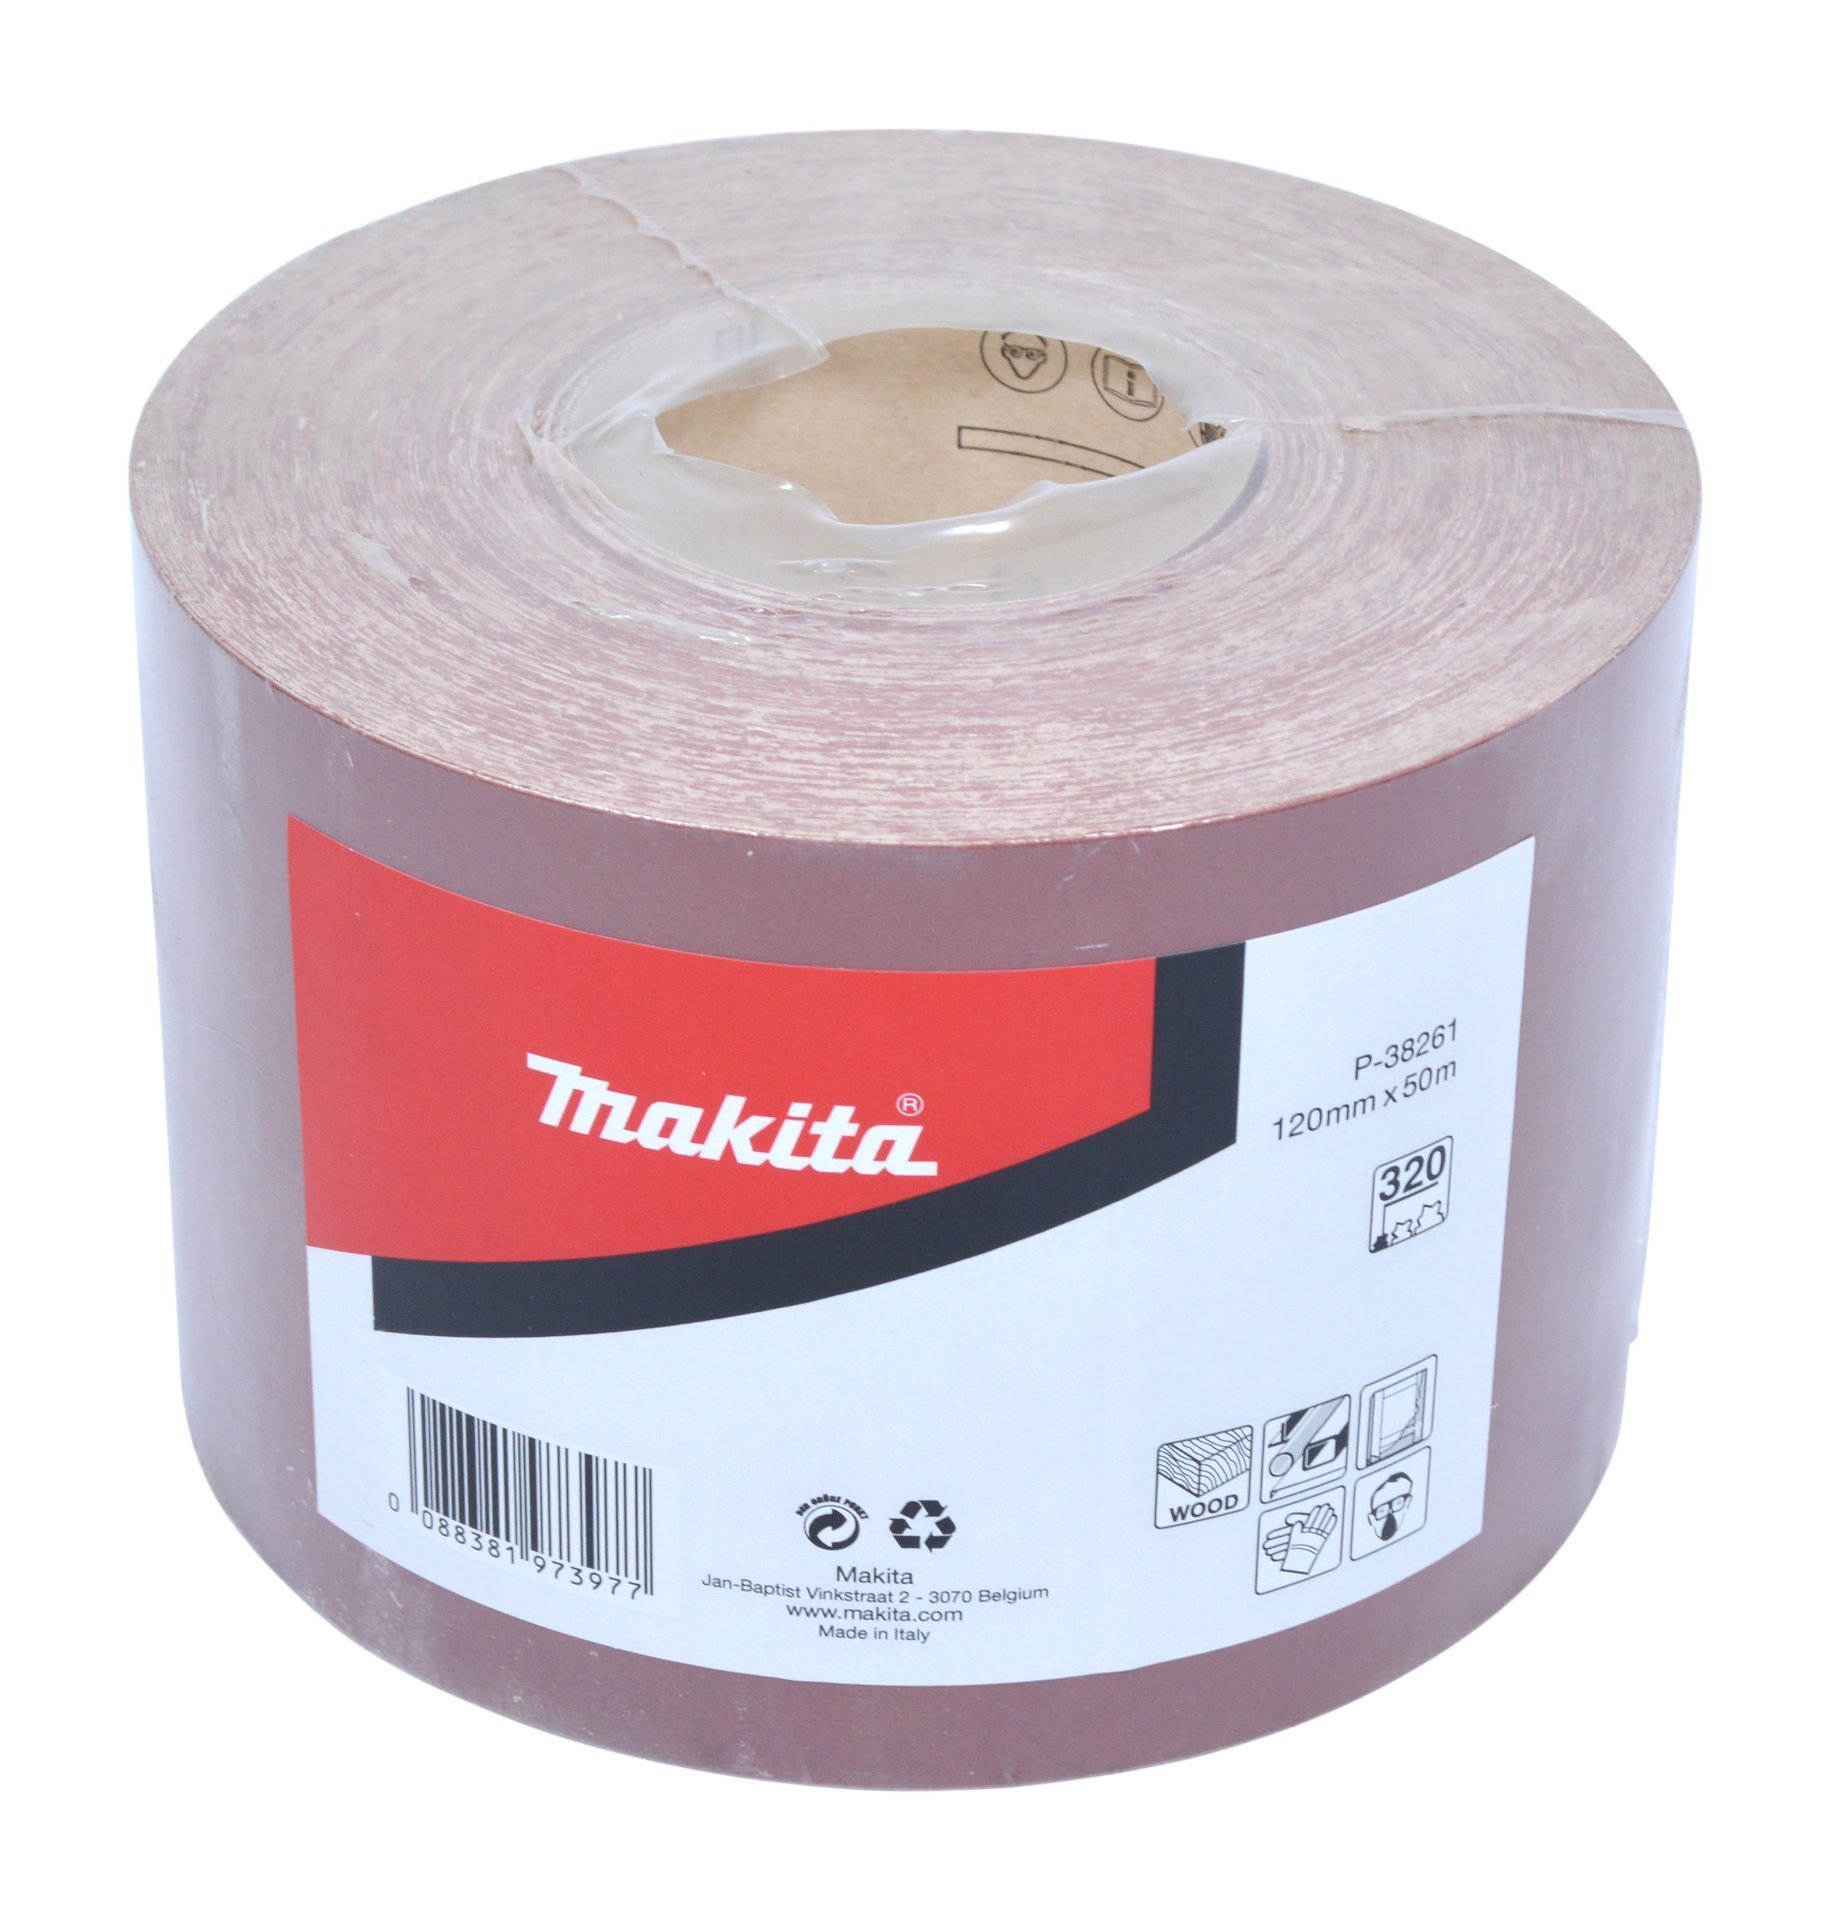 Makita Schleifpapier-Rolle P-38261